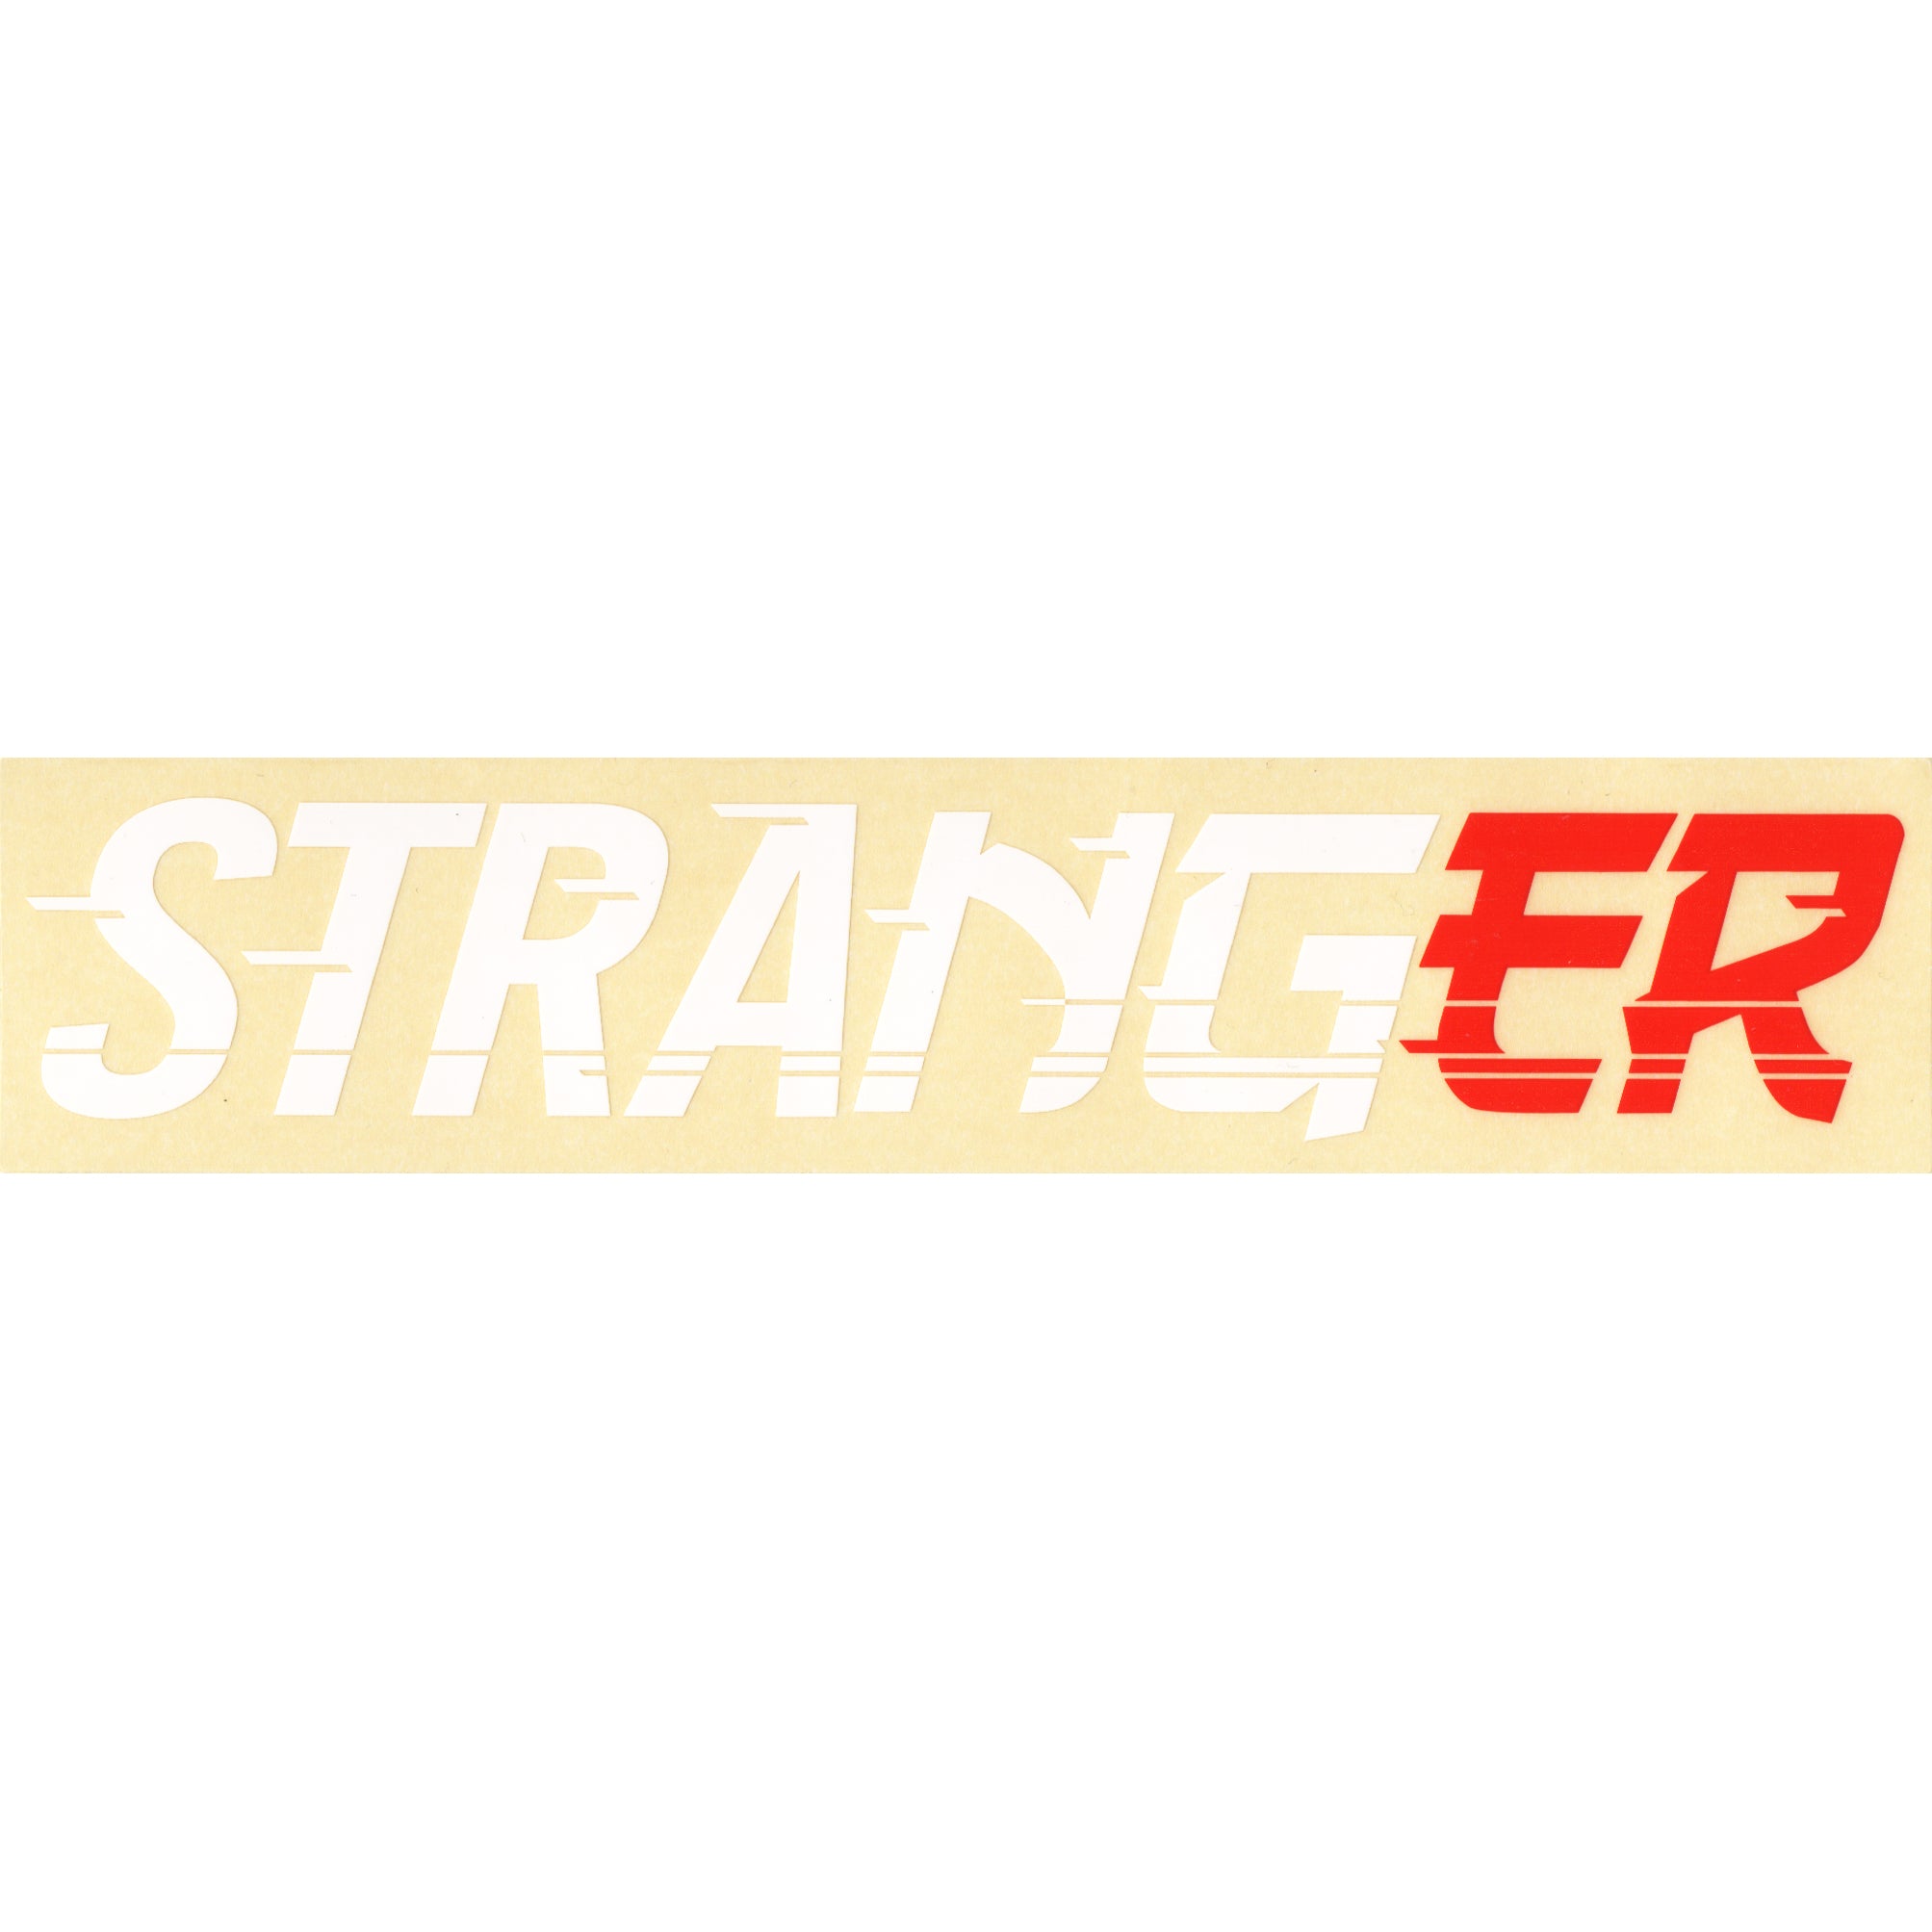 Stranger BMX Sticker / Decal